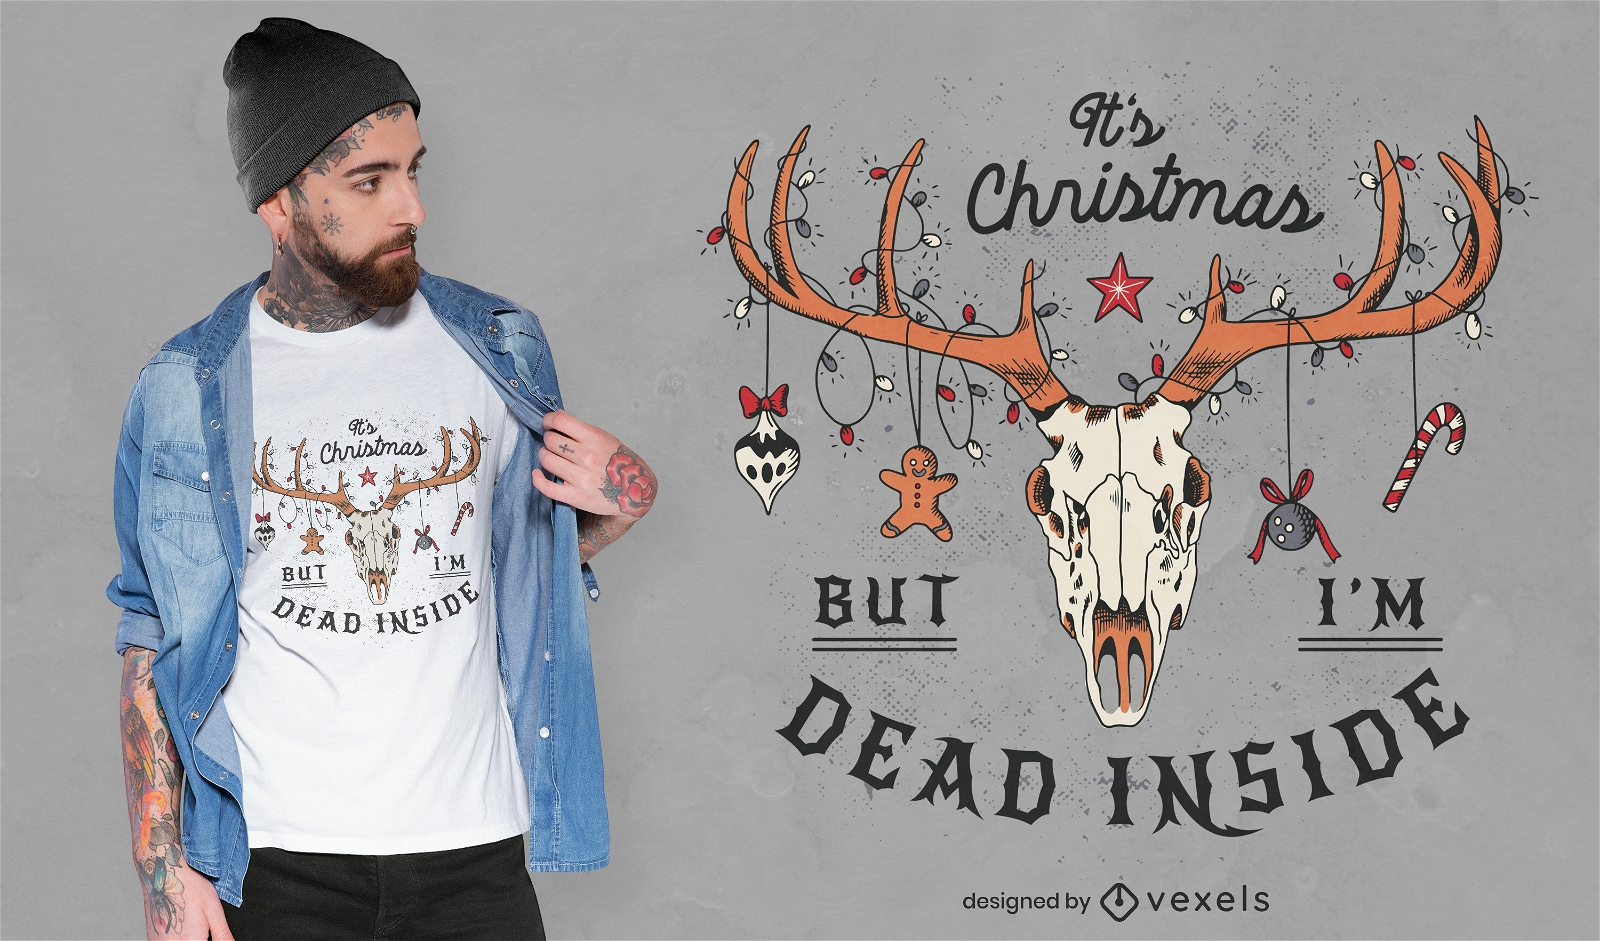 Dead inside anti-Christmas t-shirt design